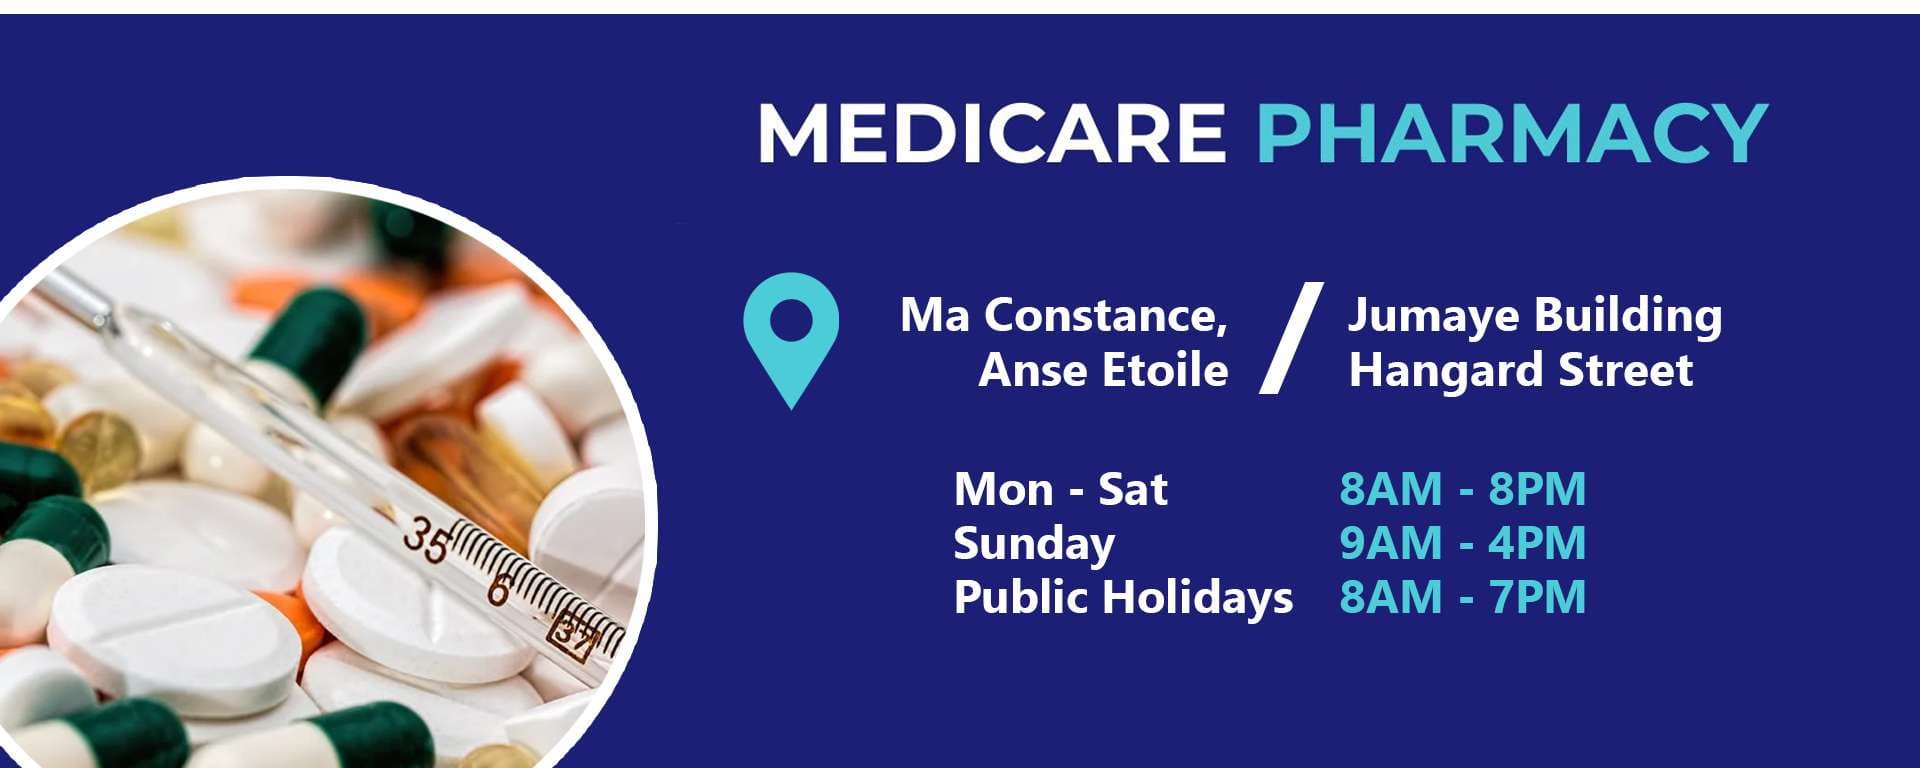 Medicare Pharmacy Seychelles - Victoria